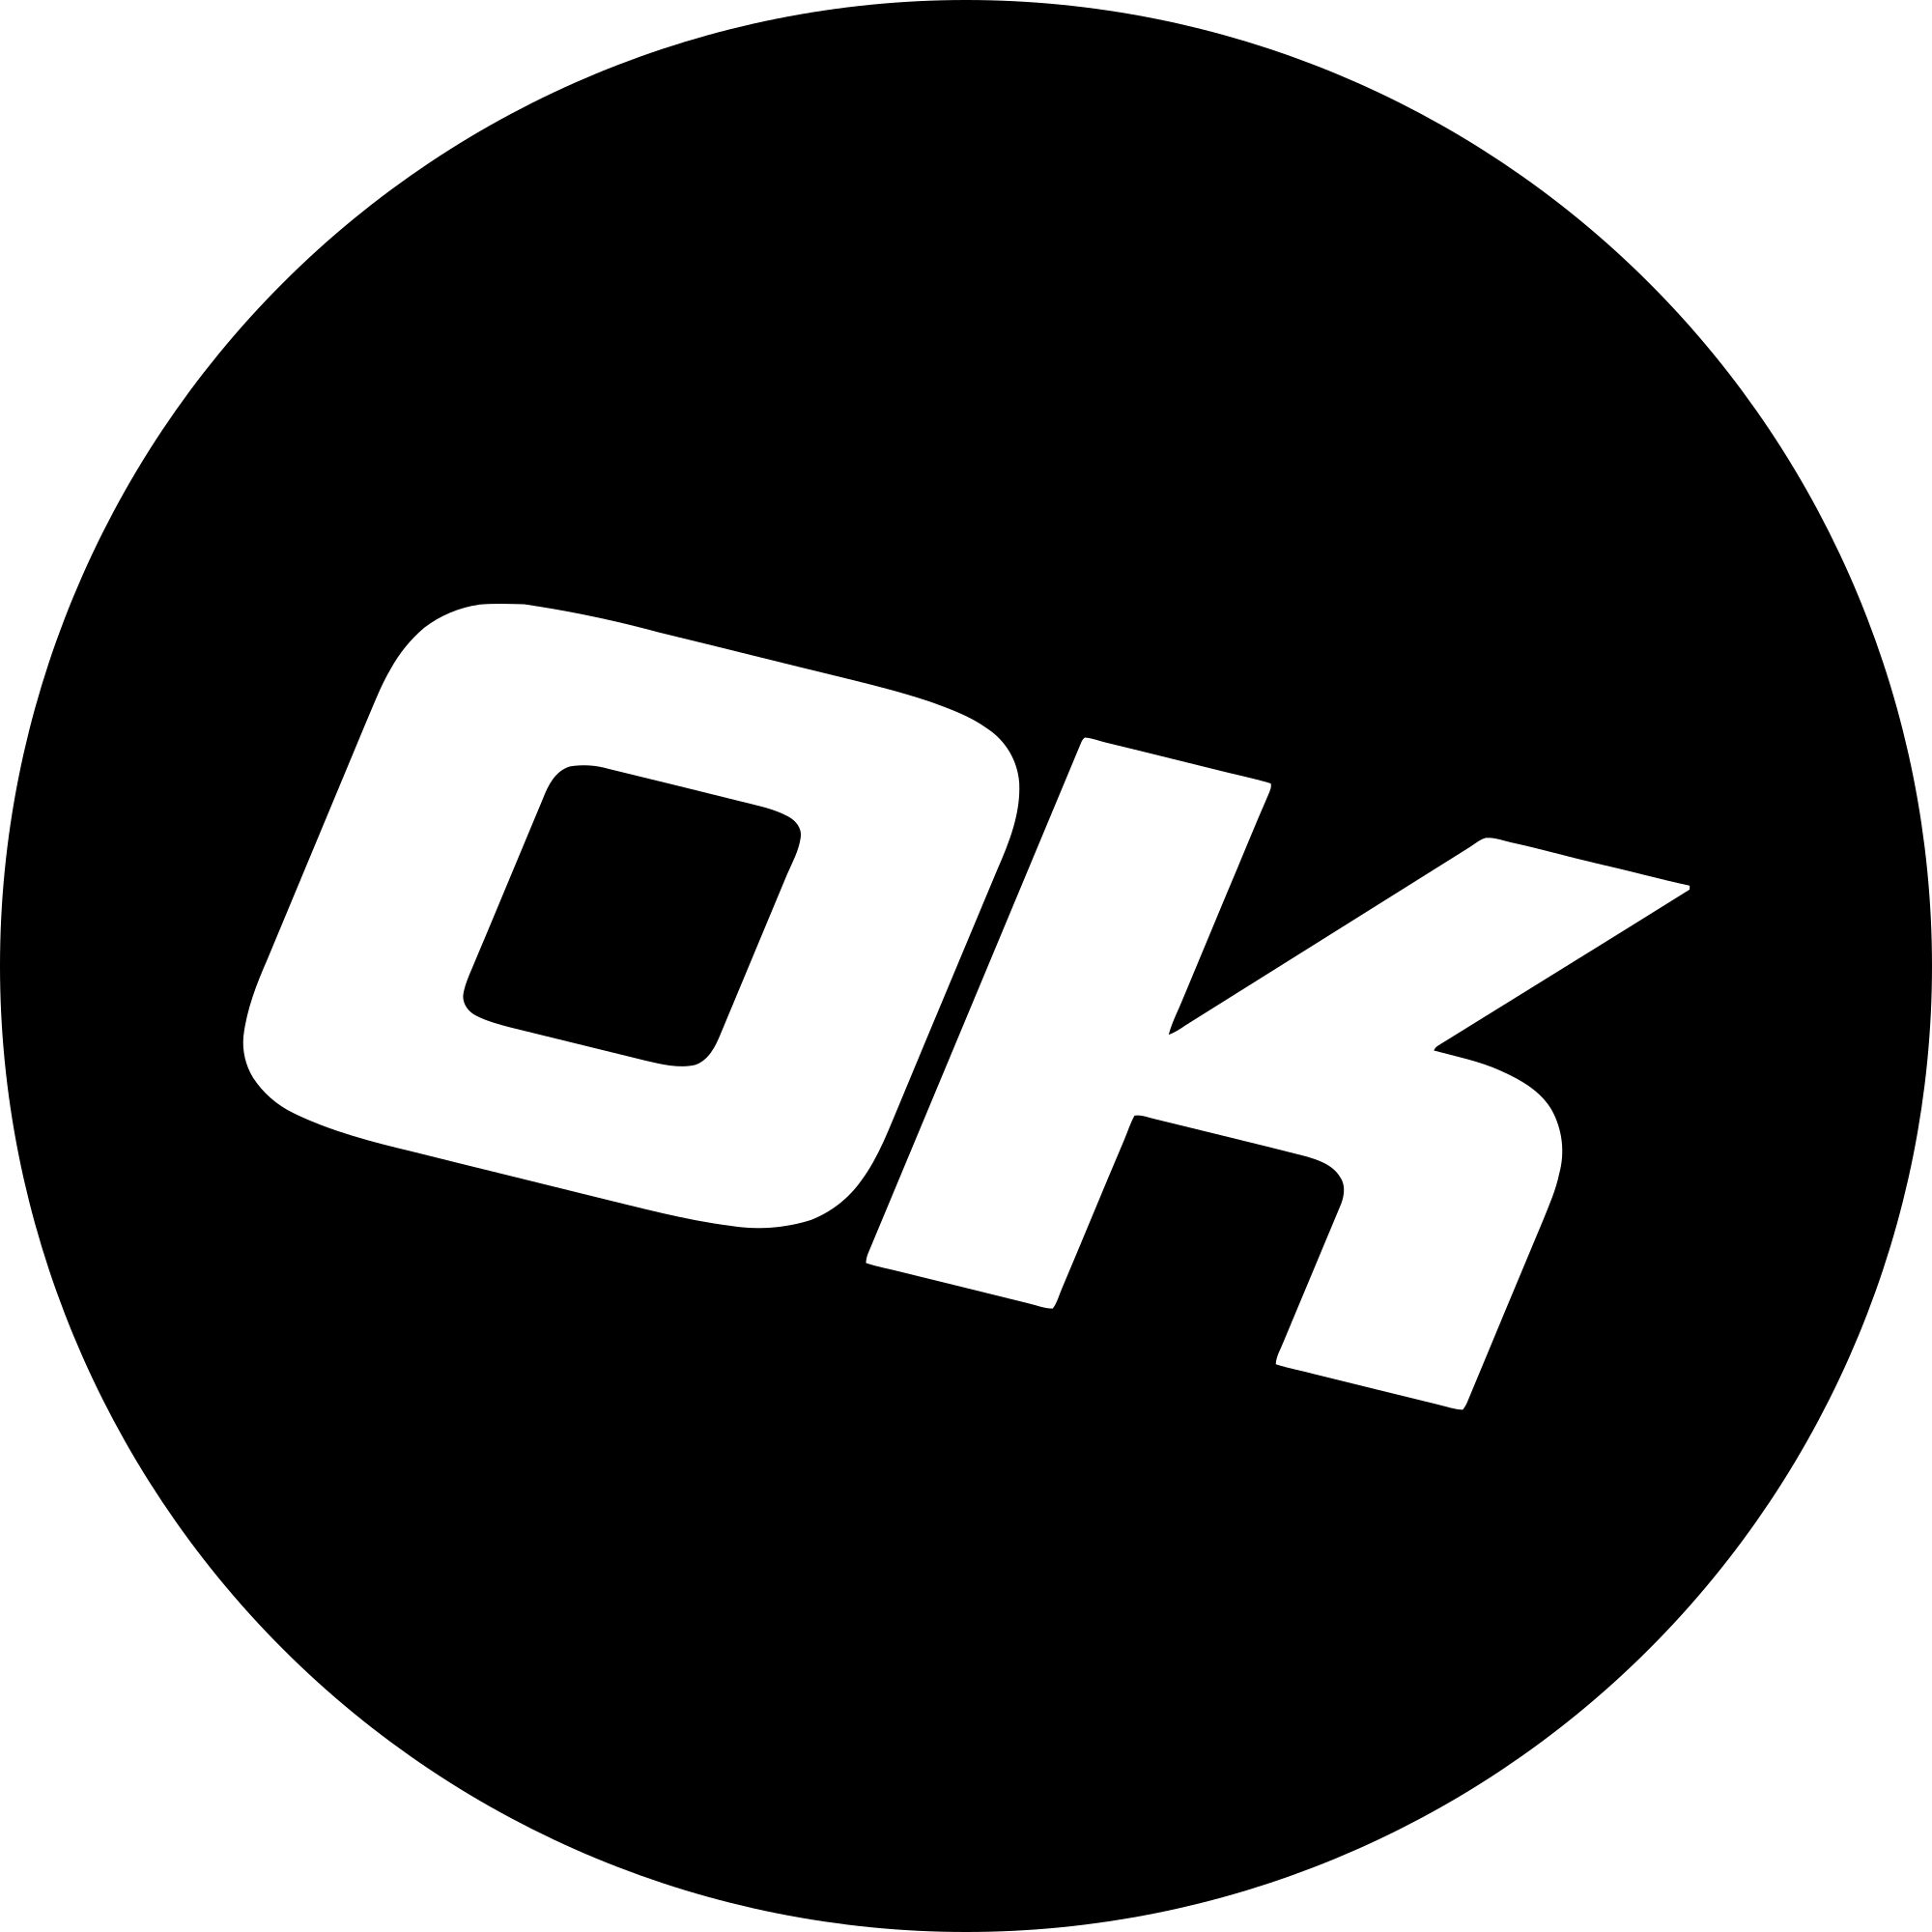 Okcash (OK) Logo .SVG and .PNG Files Download